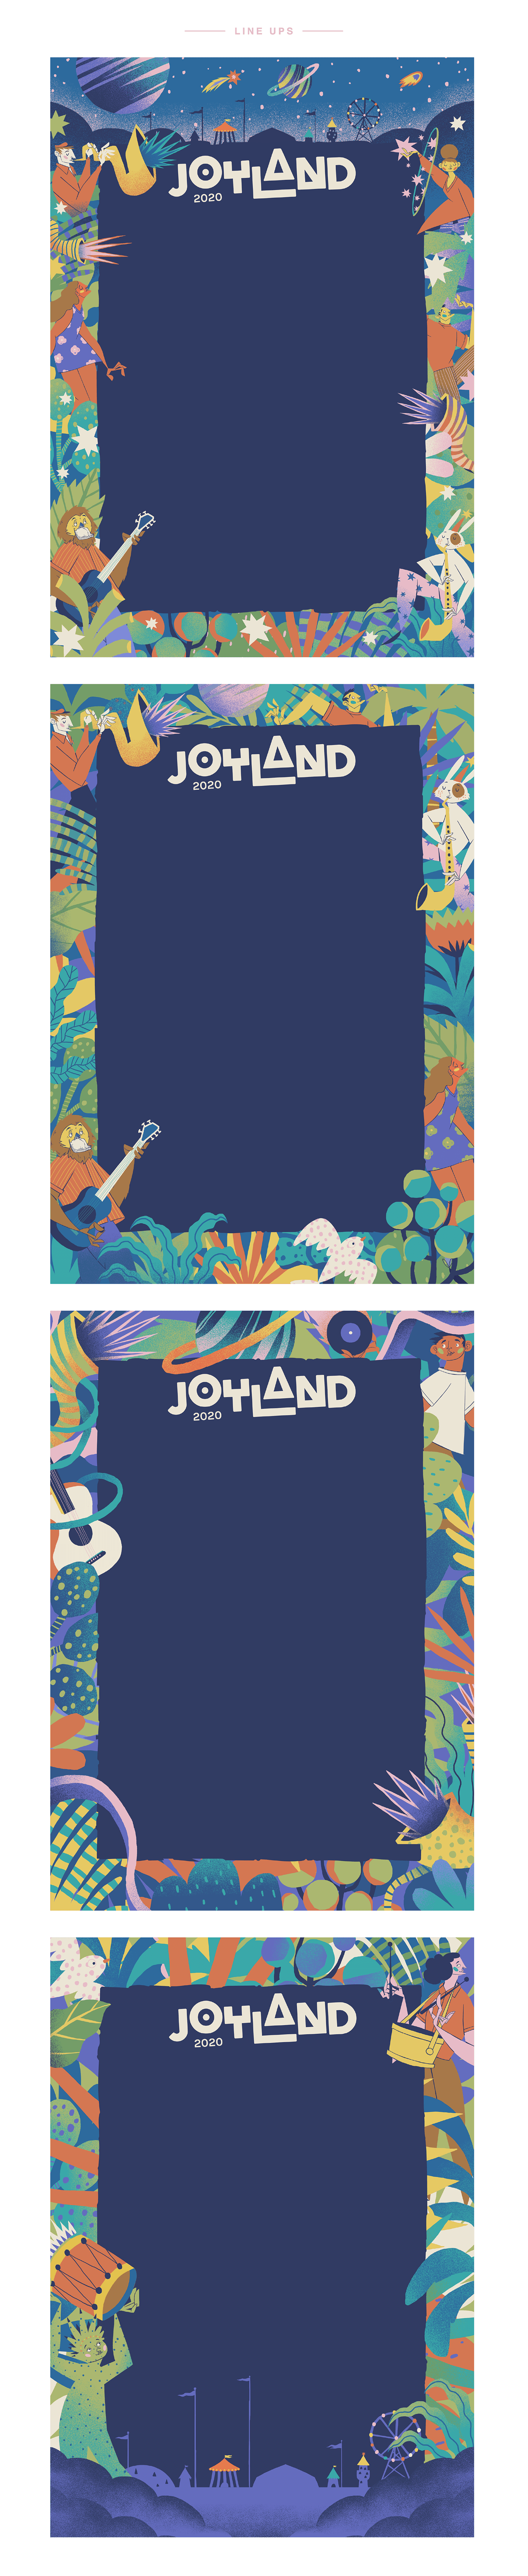 Music Festival festival Musical concert line up poster jakarta music band joyland musıc